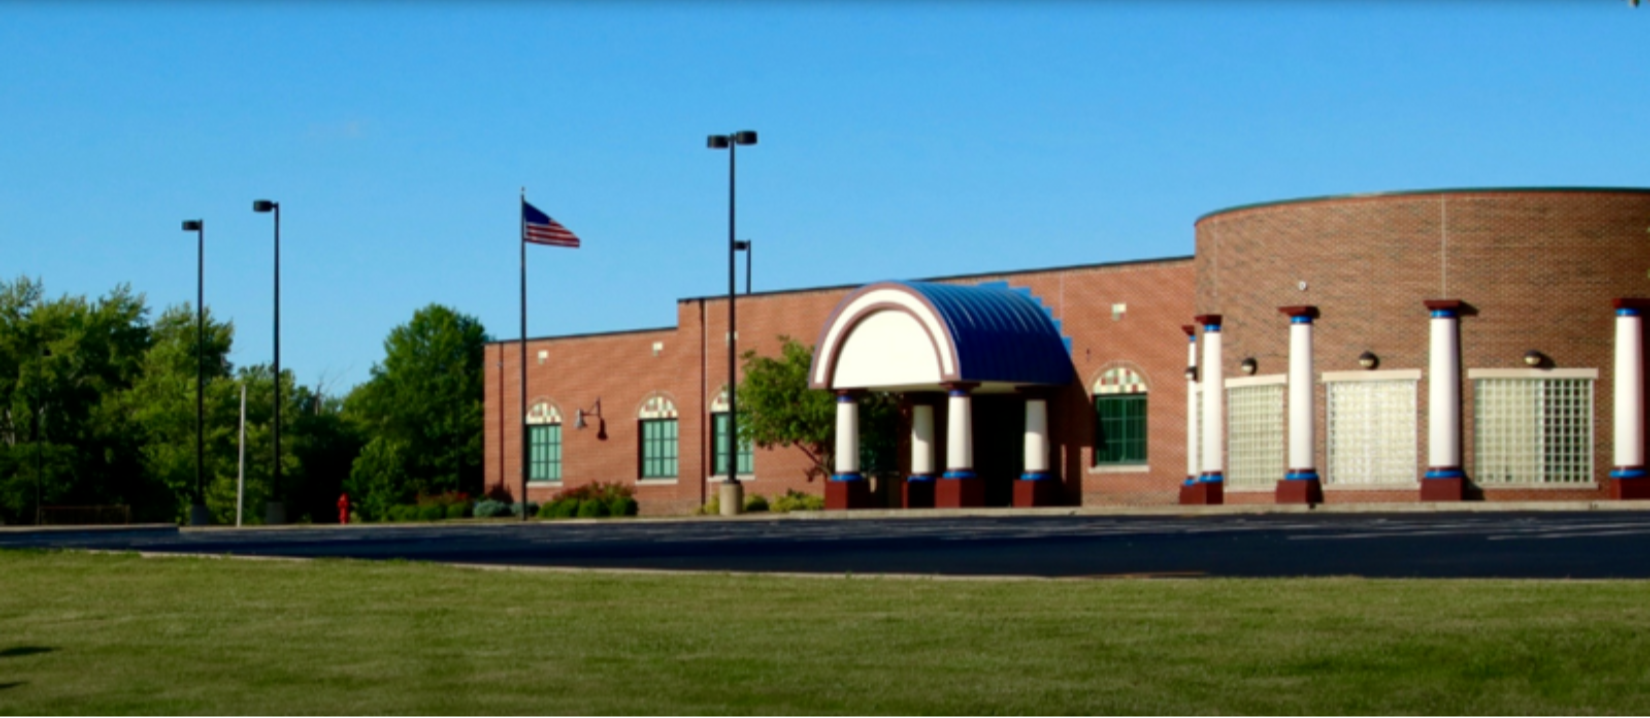 photo of little quaker academy preschool building